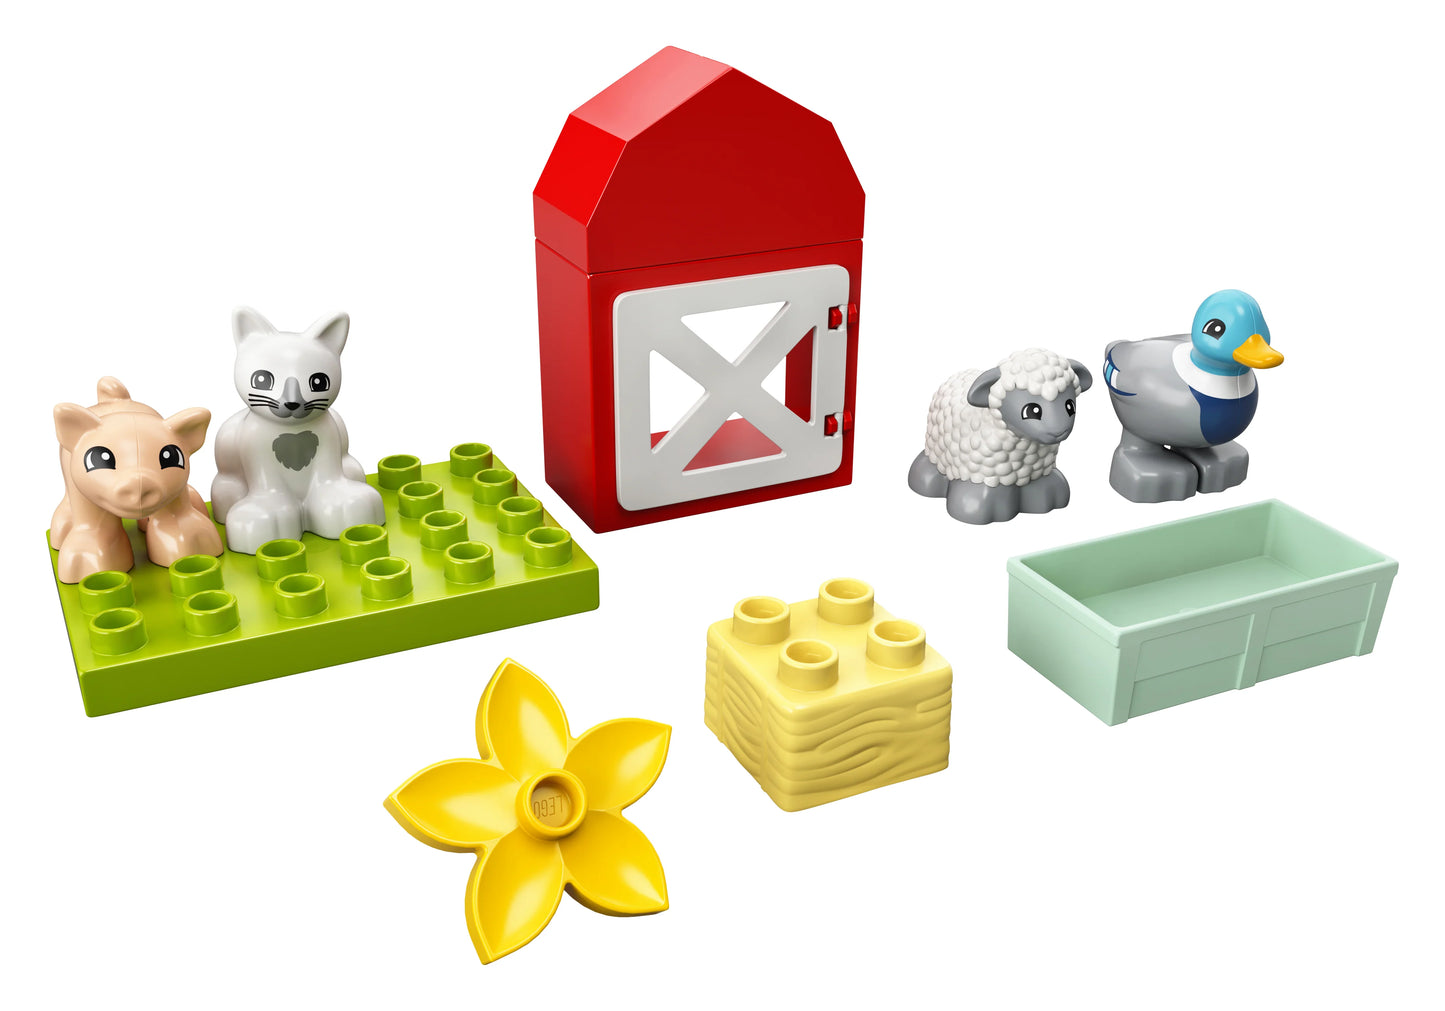 Taking care of farm animals - LEGO Duplo